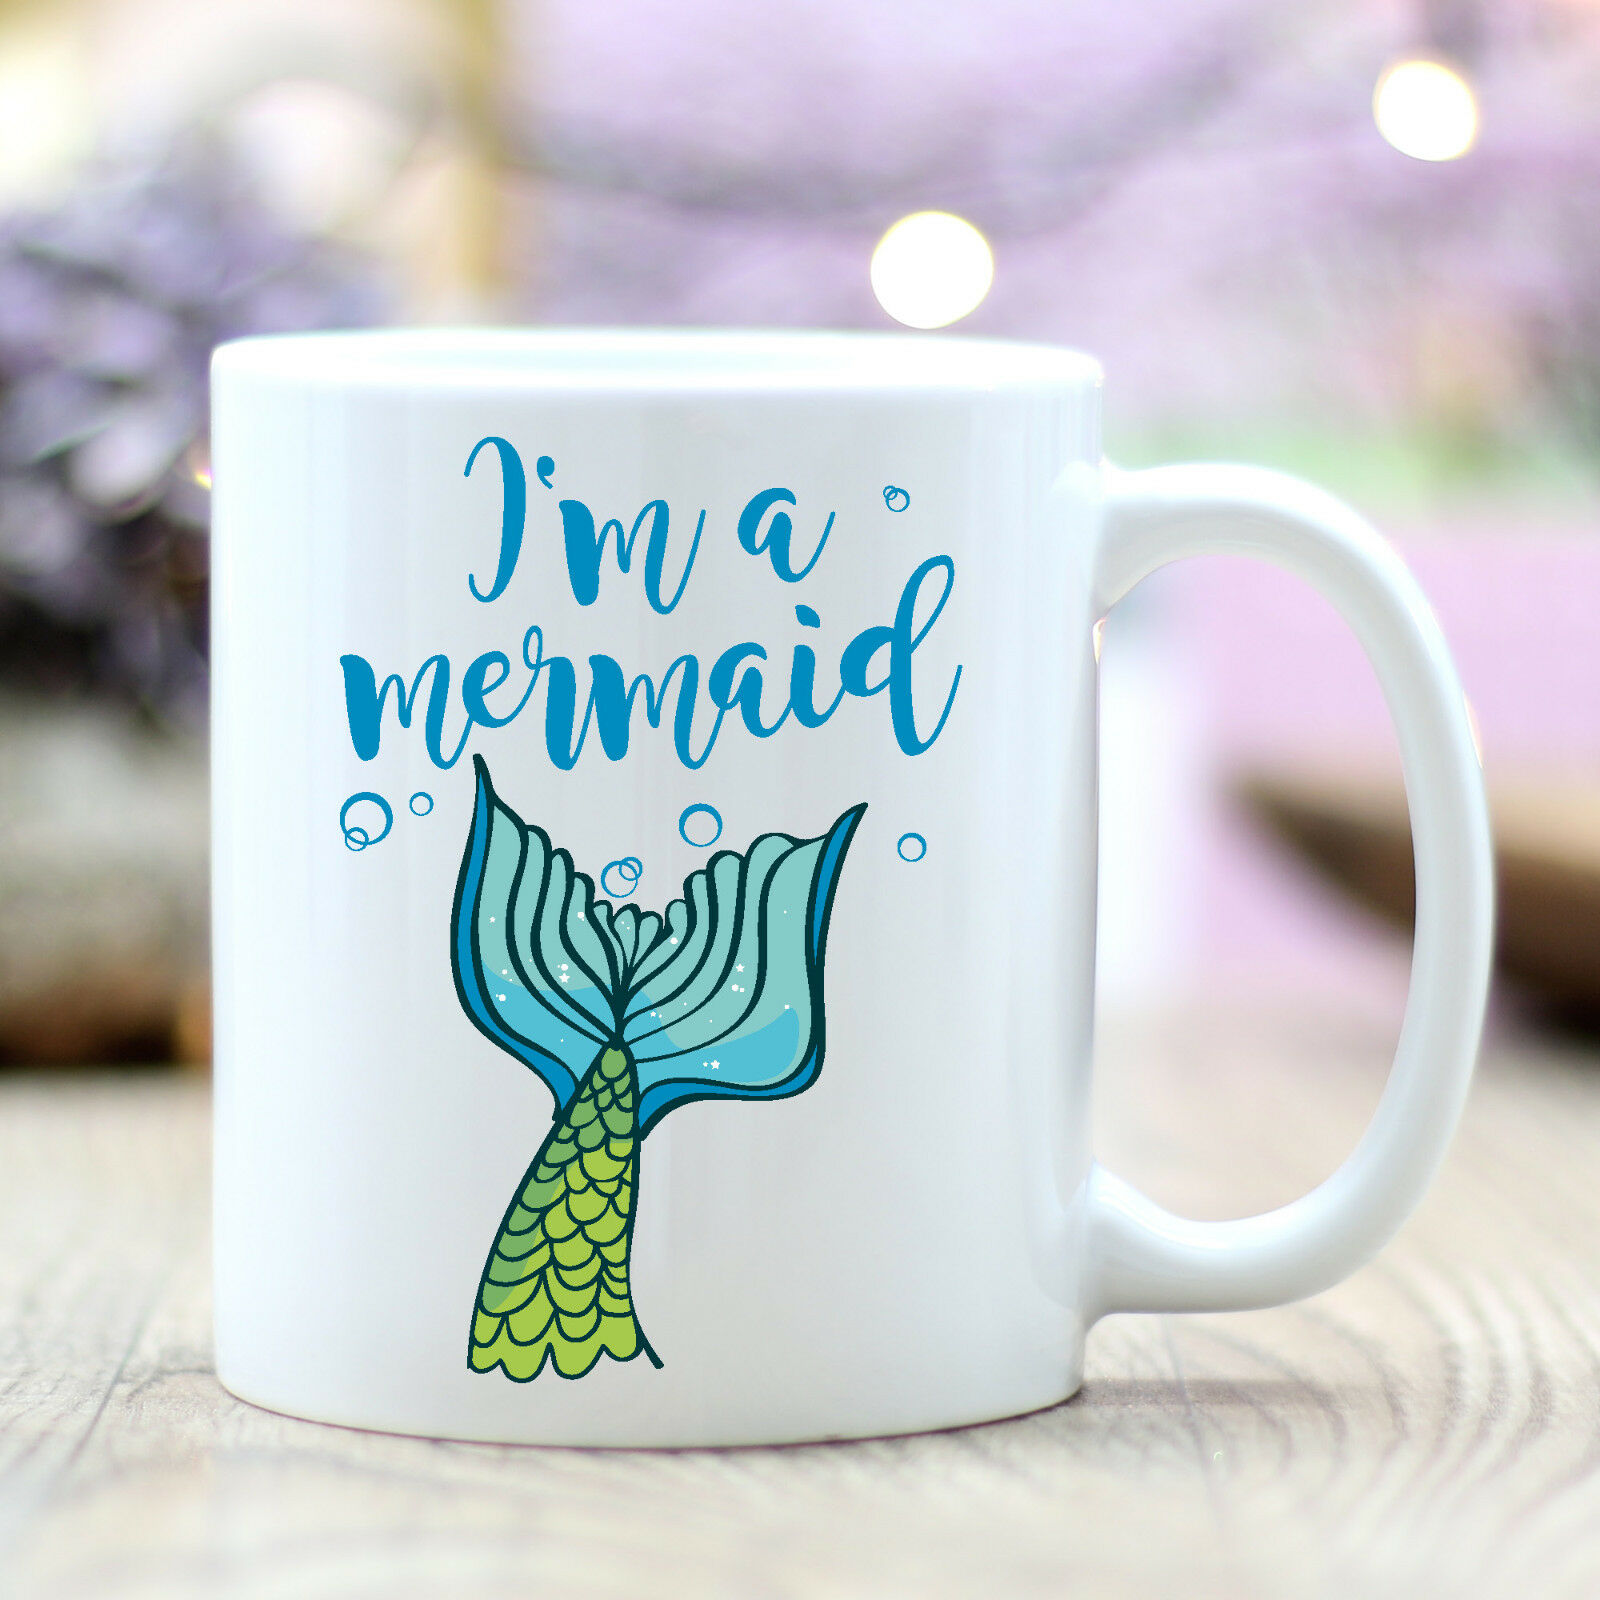 T168 Wandtattoo-Loft Kaffee Tasse "I'm a mermaid" Meerjungfrau Nixe Flosse Meer